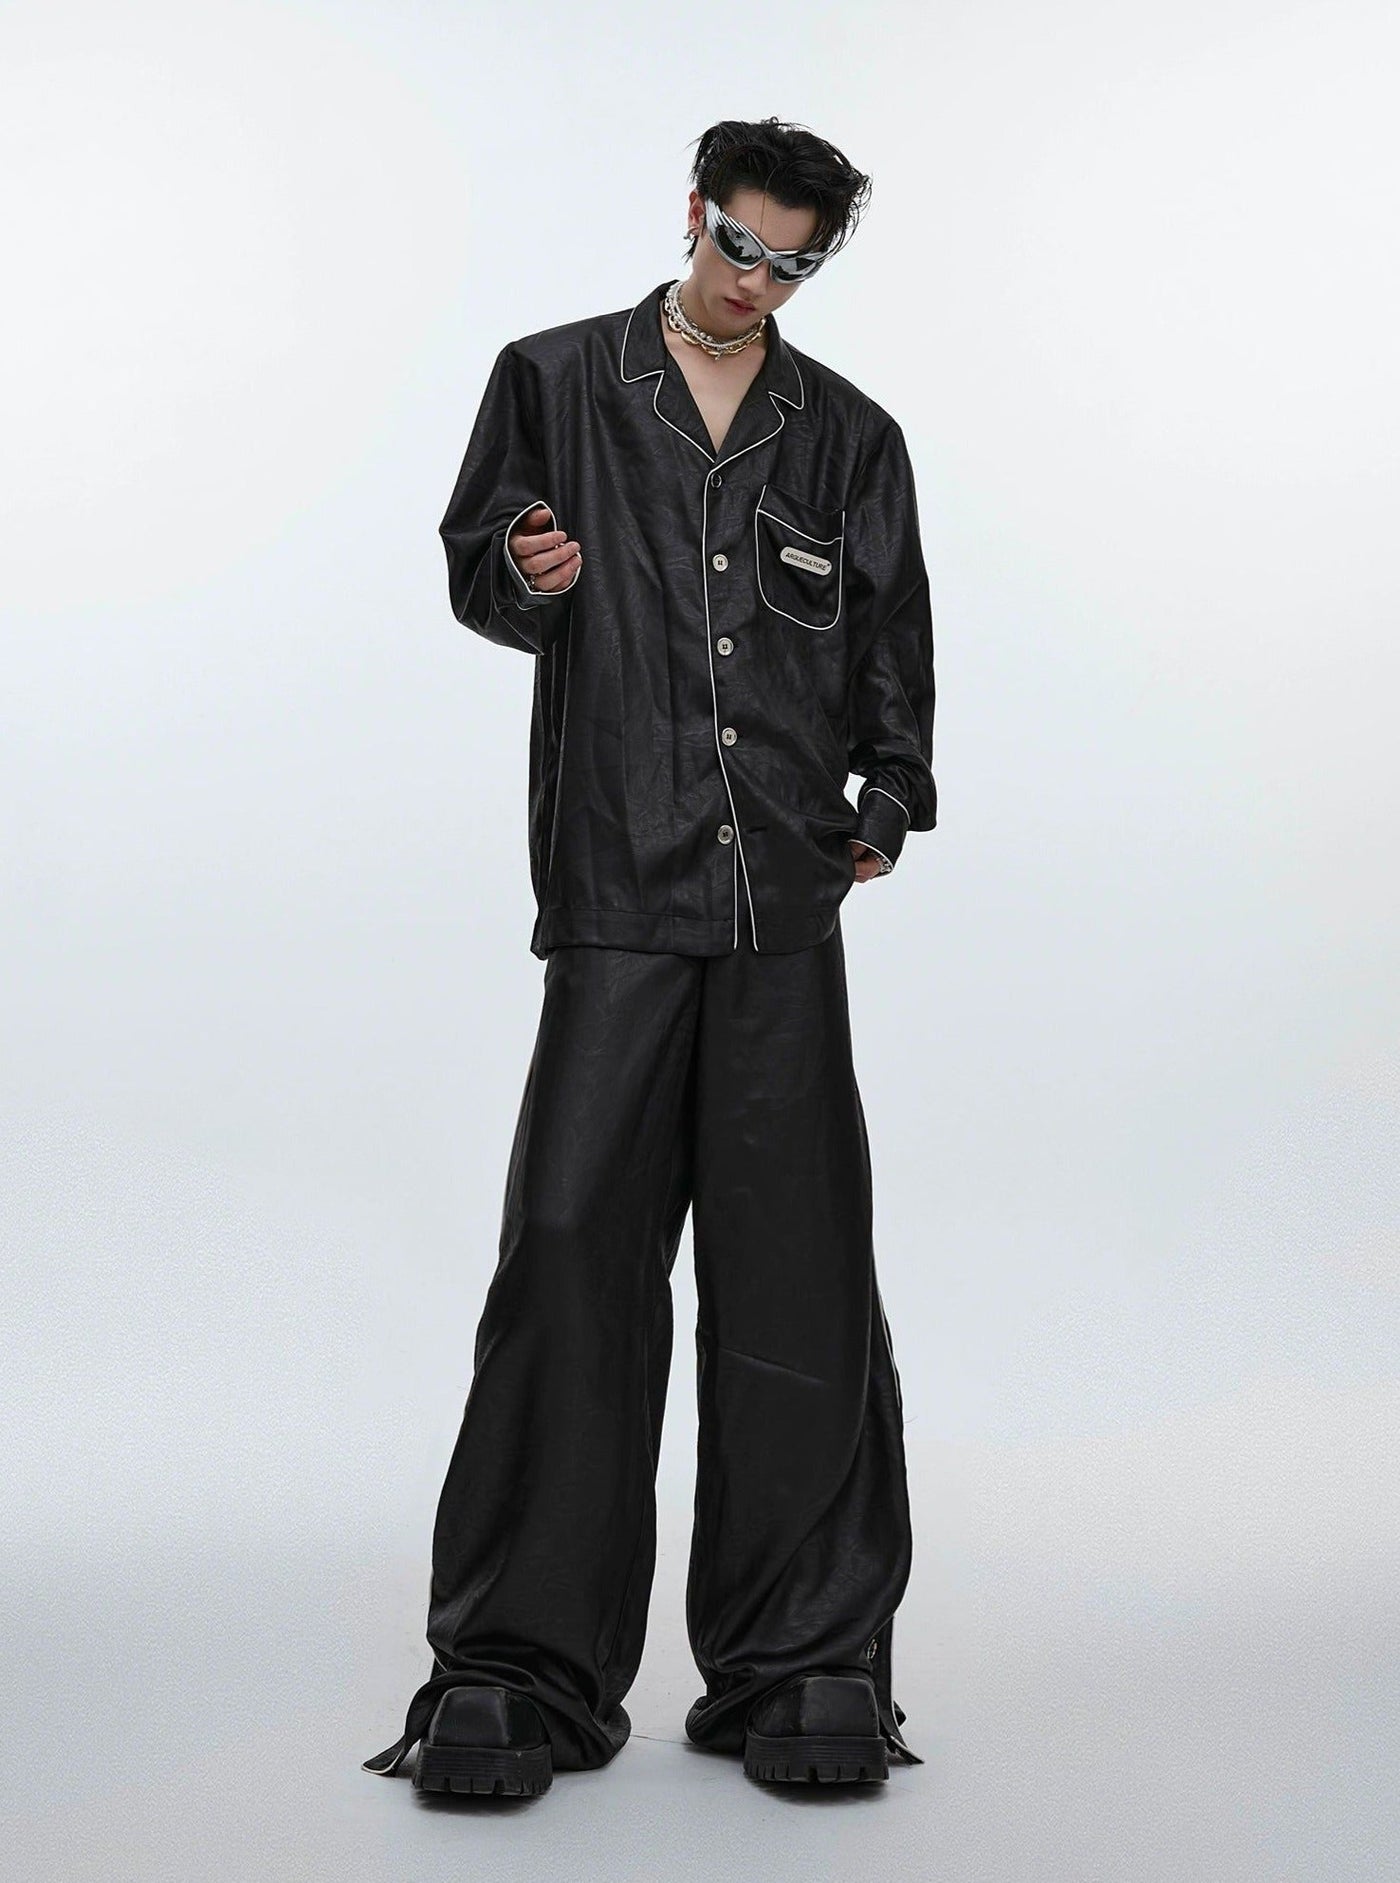 Silky Sleepwear Shirt & Pants Set Korean Street Fashion Clothing Set By Argue Culture Shop Online at OH Vault